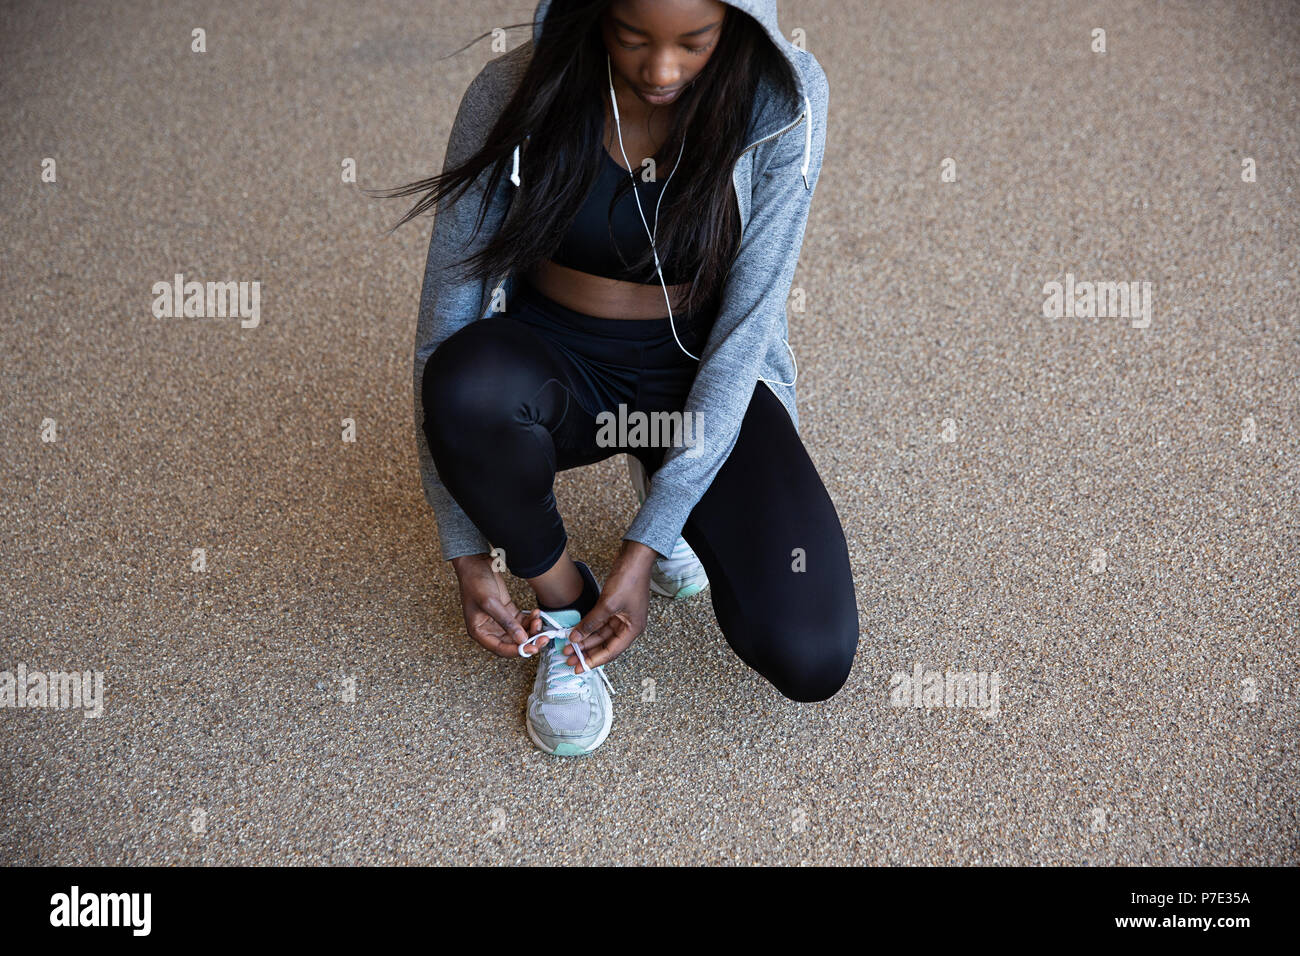 Young woman tying shoelace Stock Photo